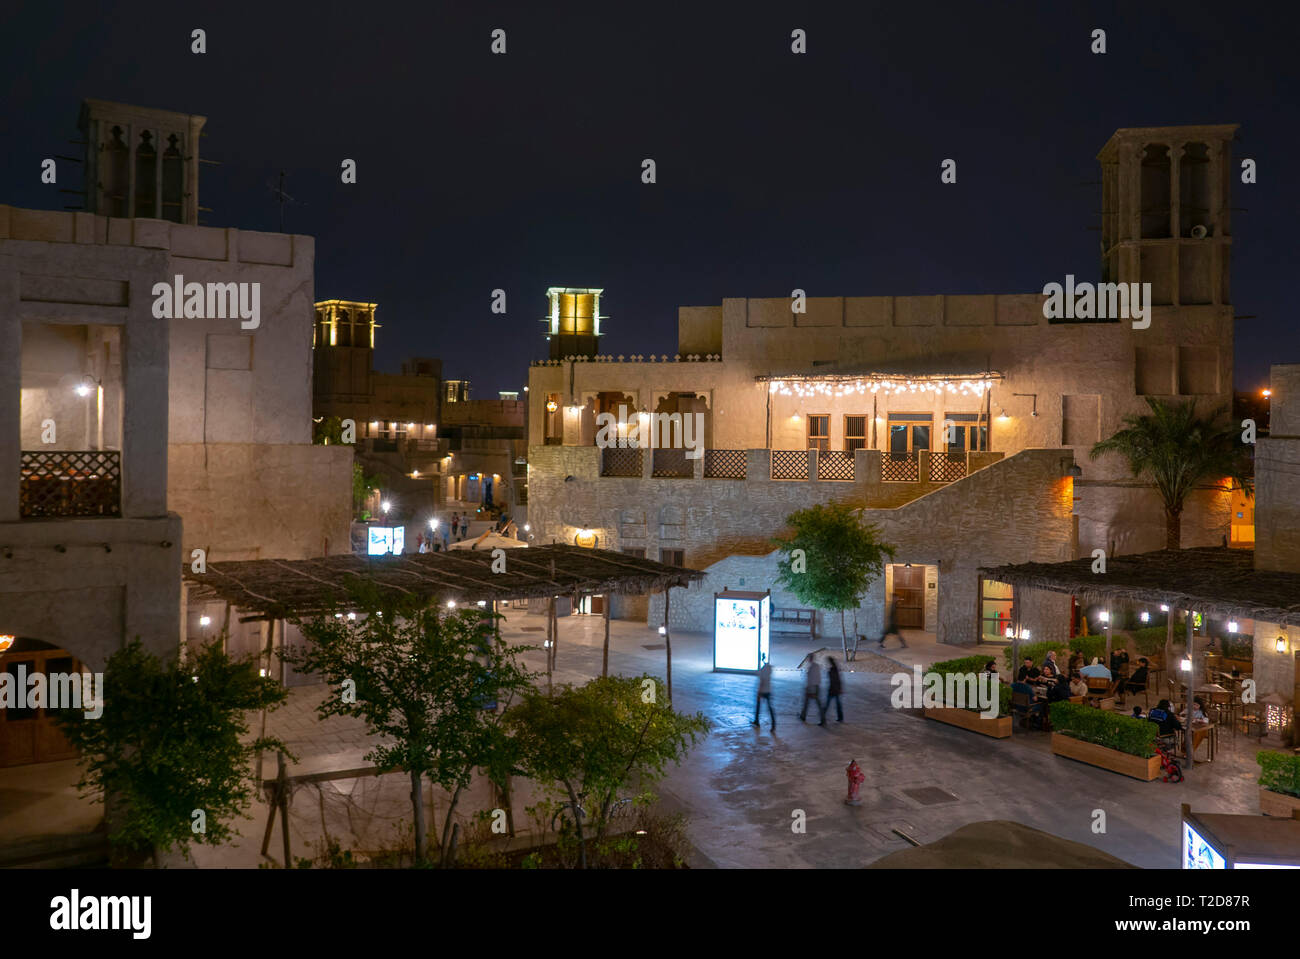 Al Seef Erbe Souk in Dubai, Vereinigte Arabische Emirate Stockfoto